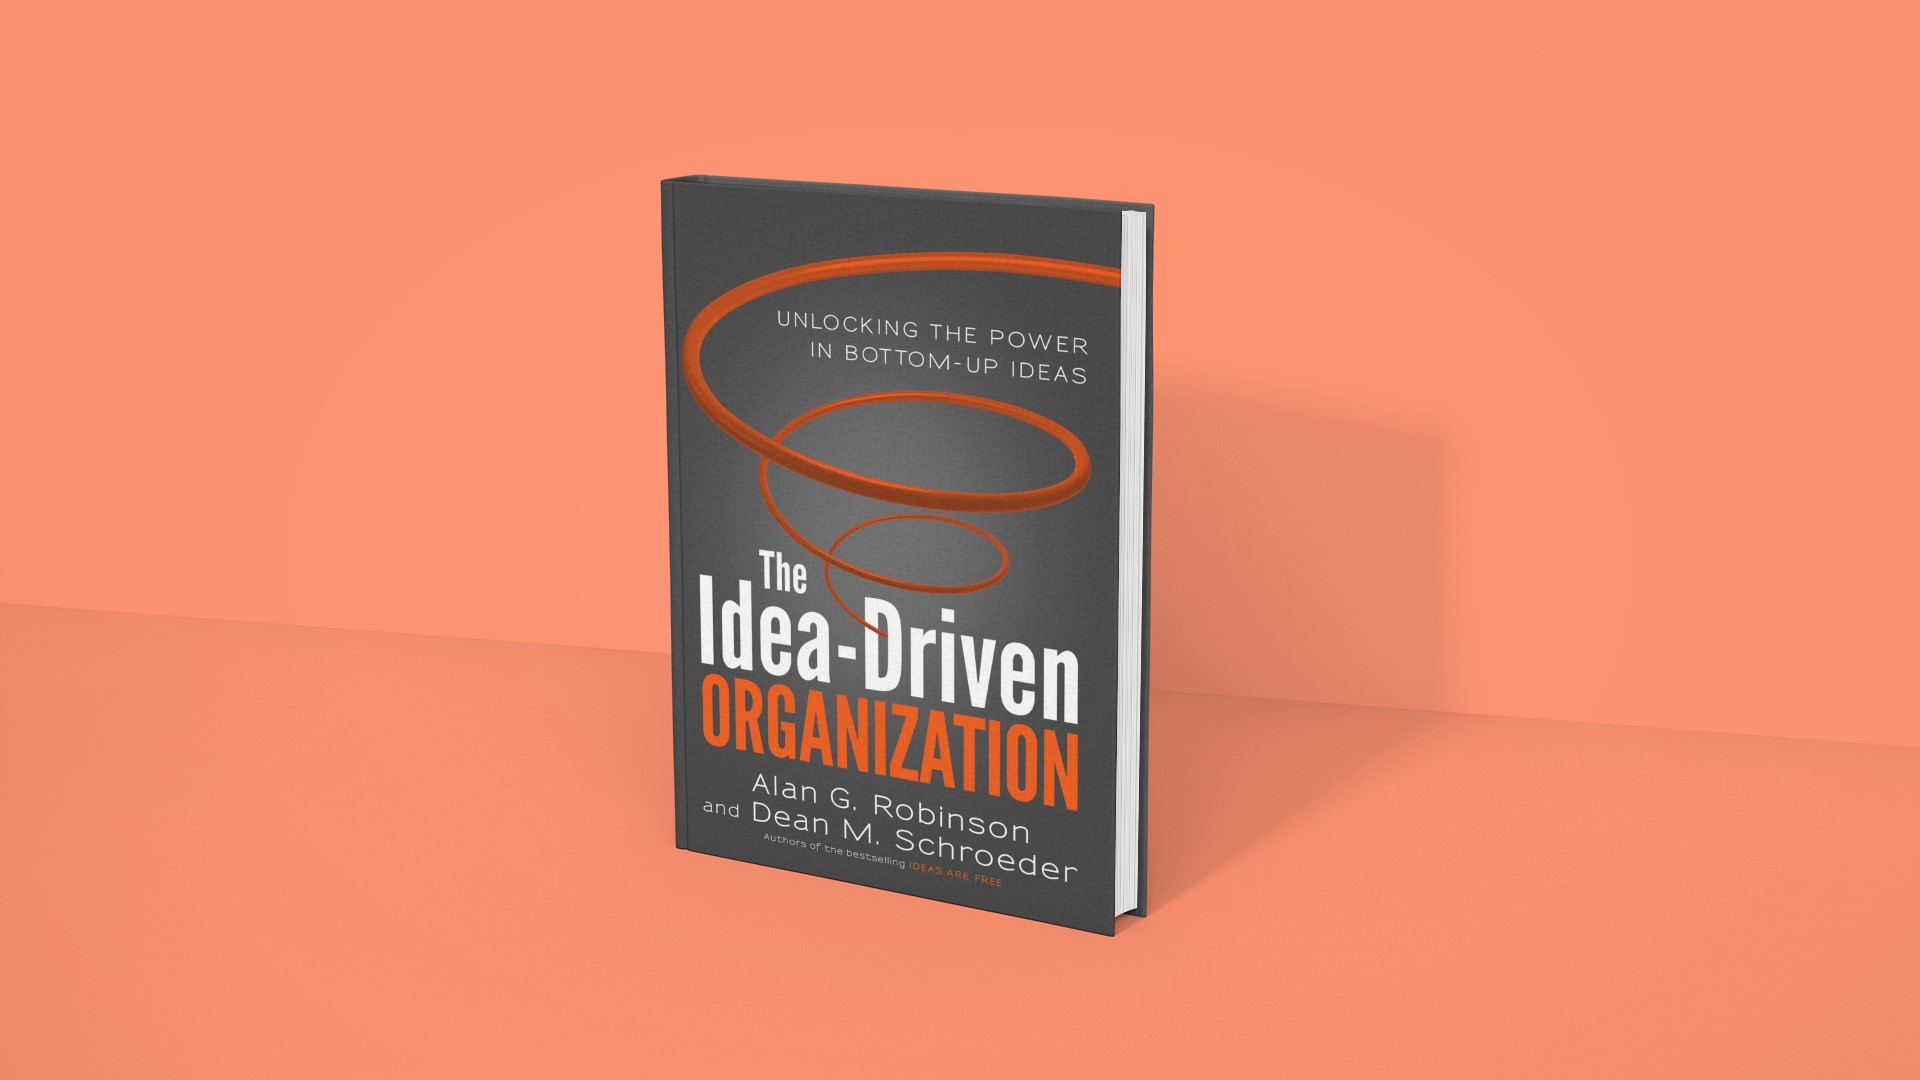 The Idea-Driven Organization - Alan G. Robinson and Dean M. Schroeder